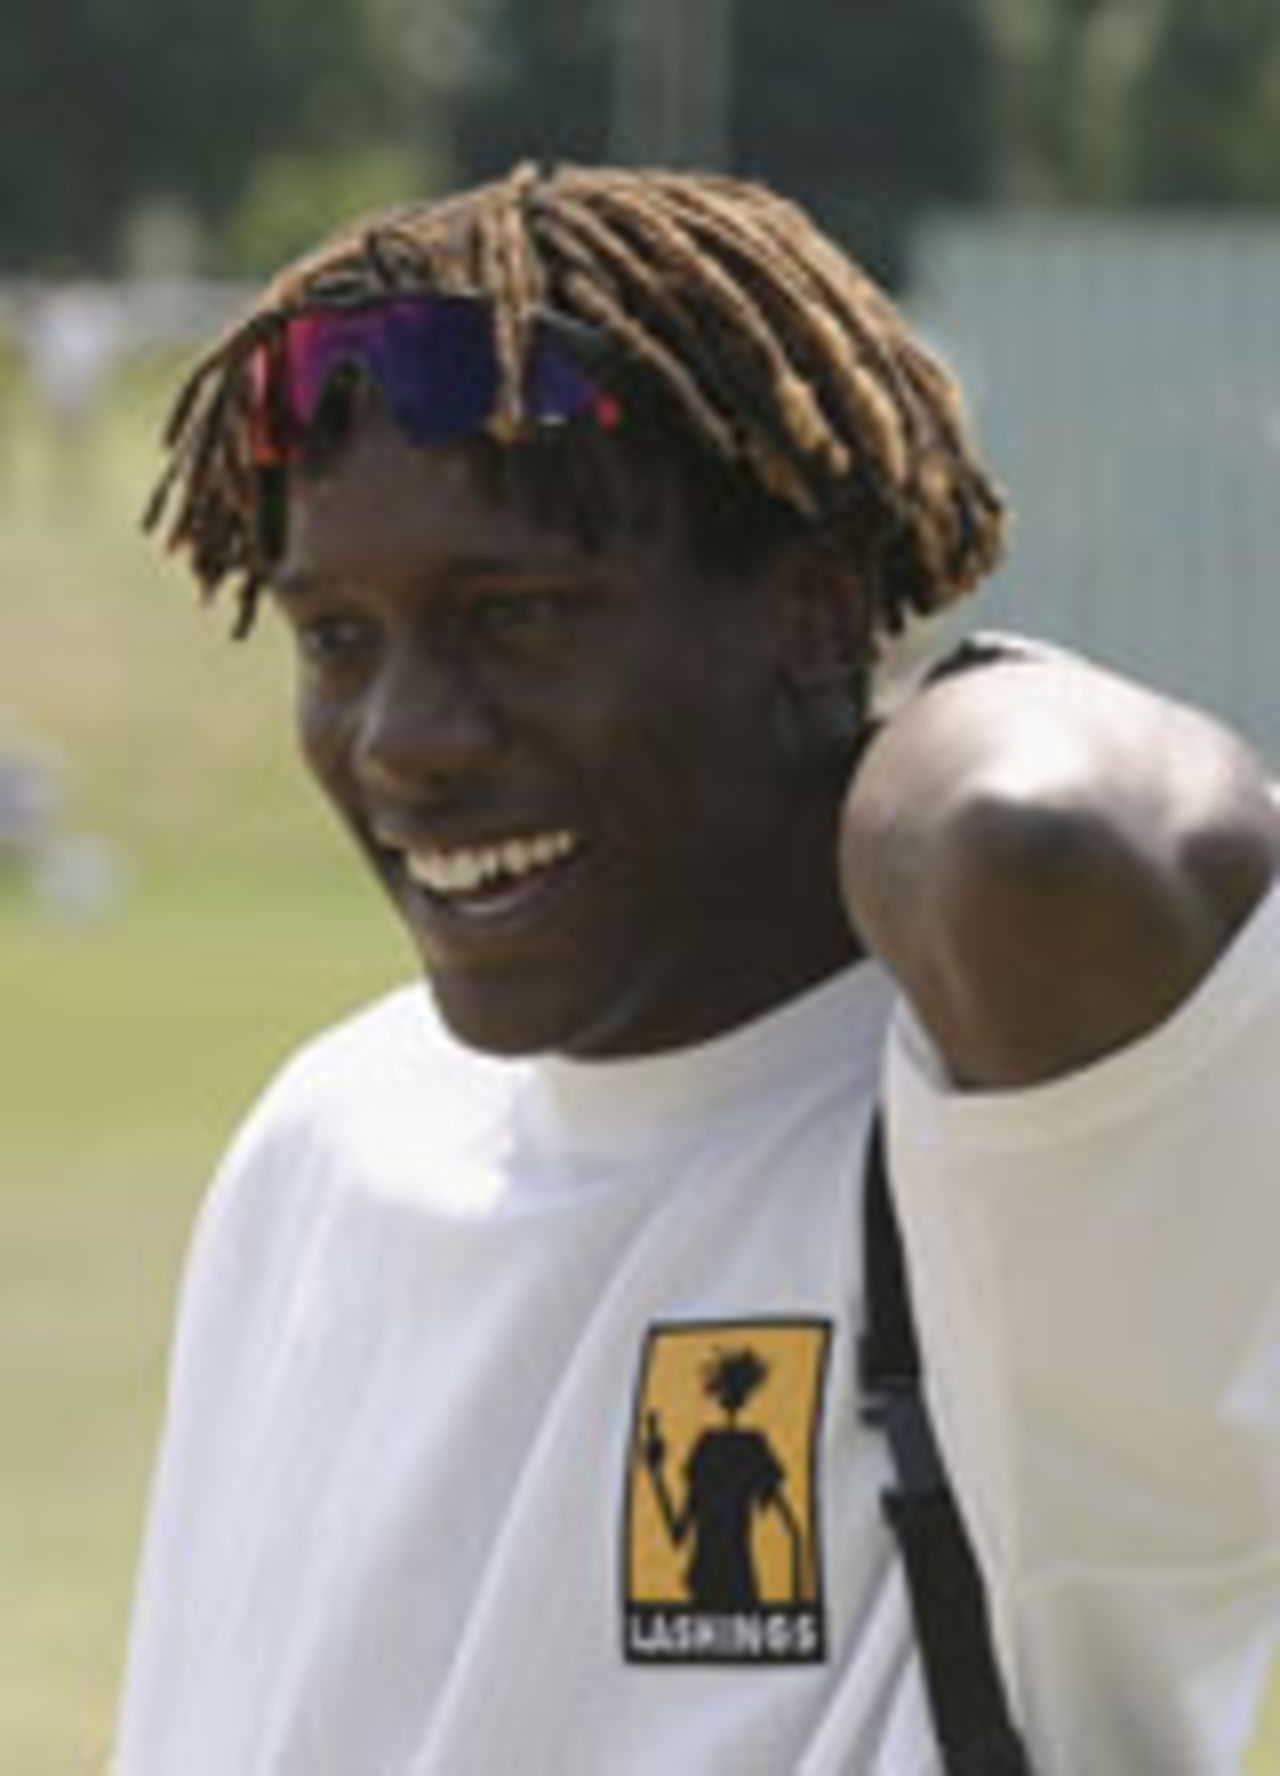 Henry Olonga wearing a Lashings shirt, June 24 2003